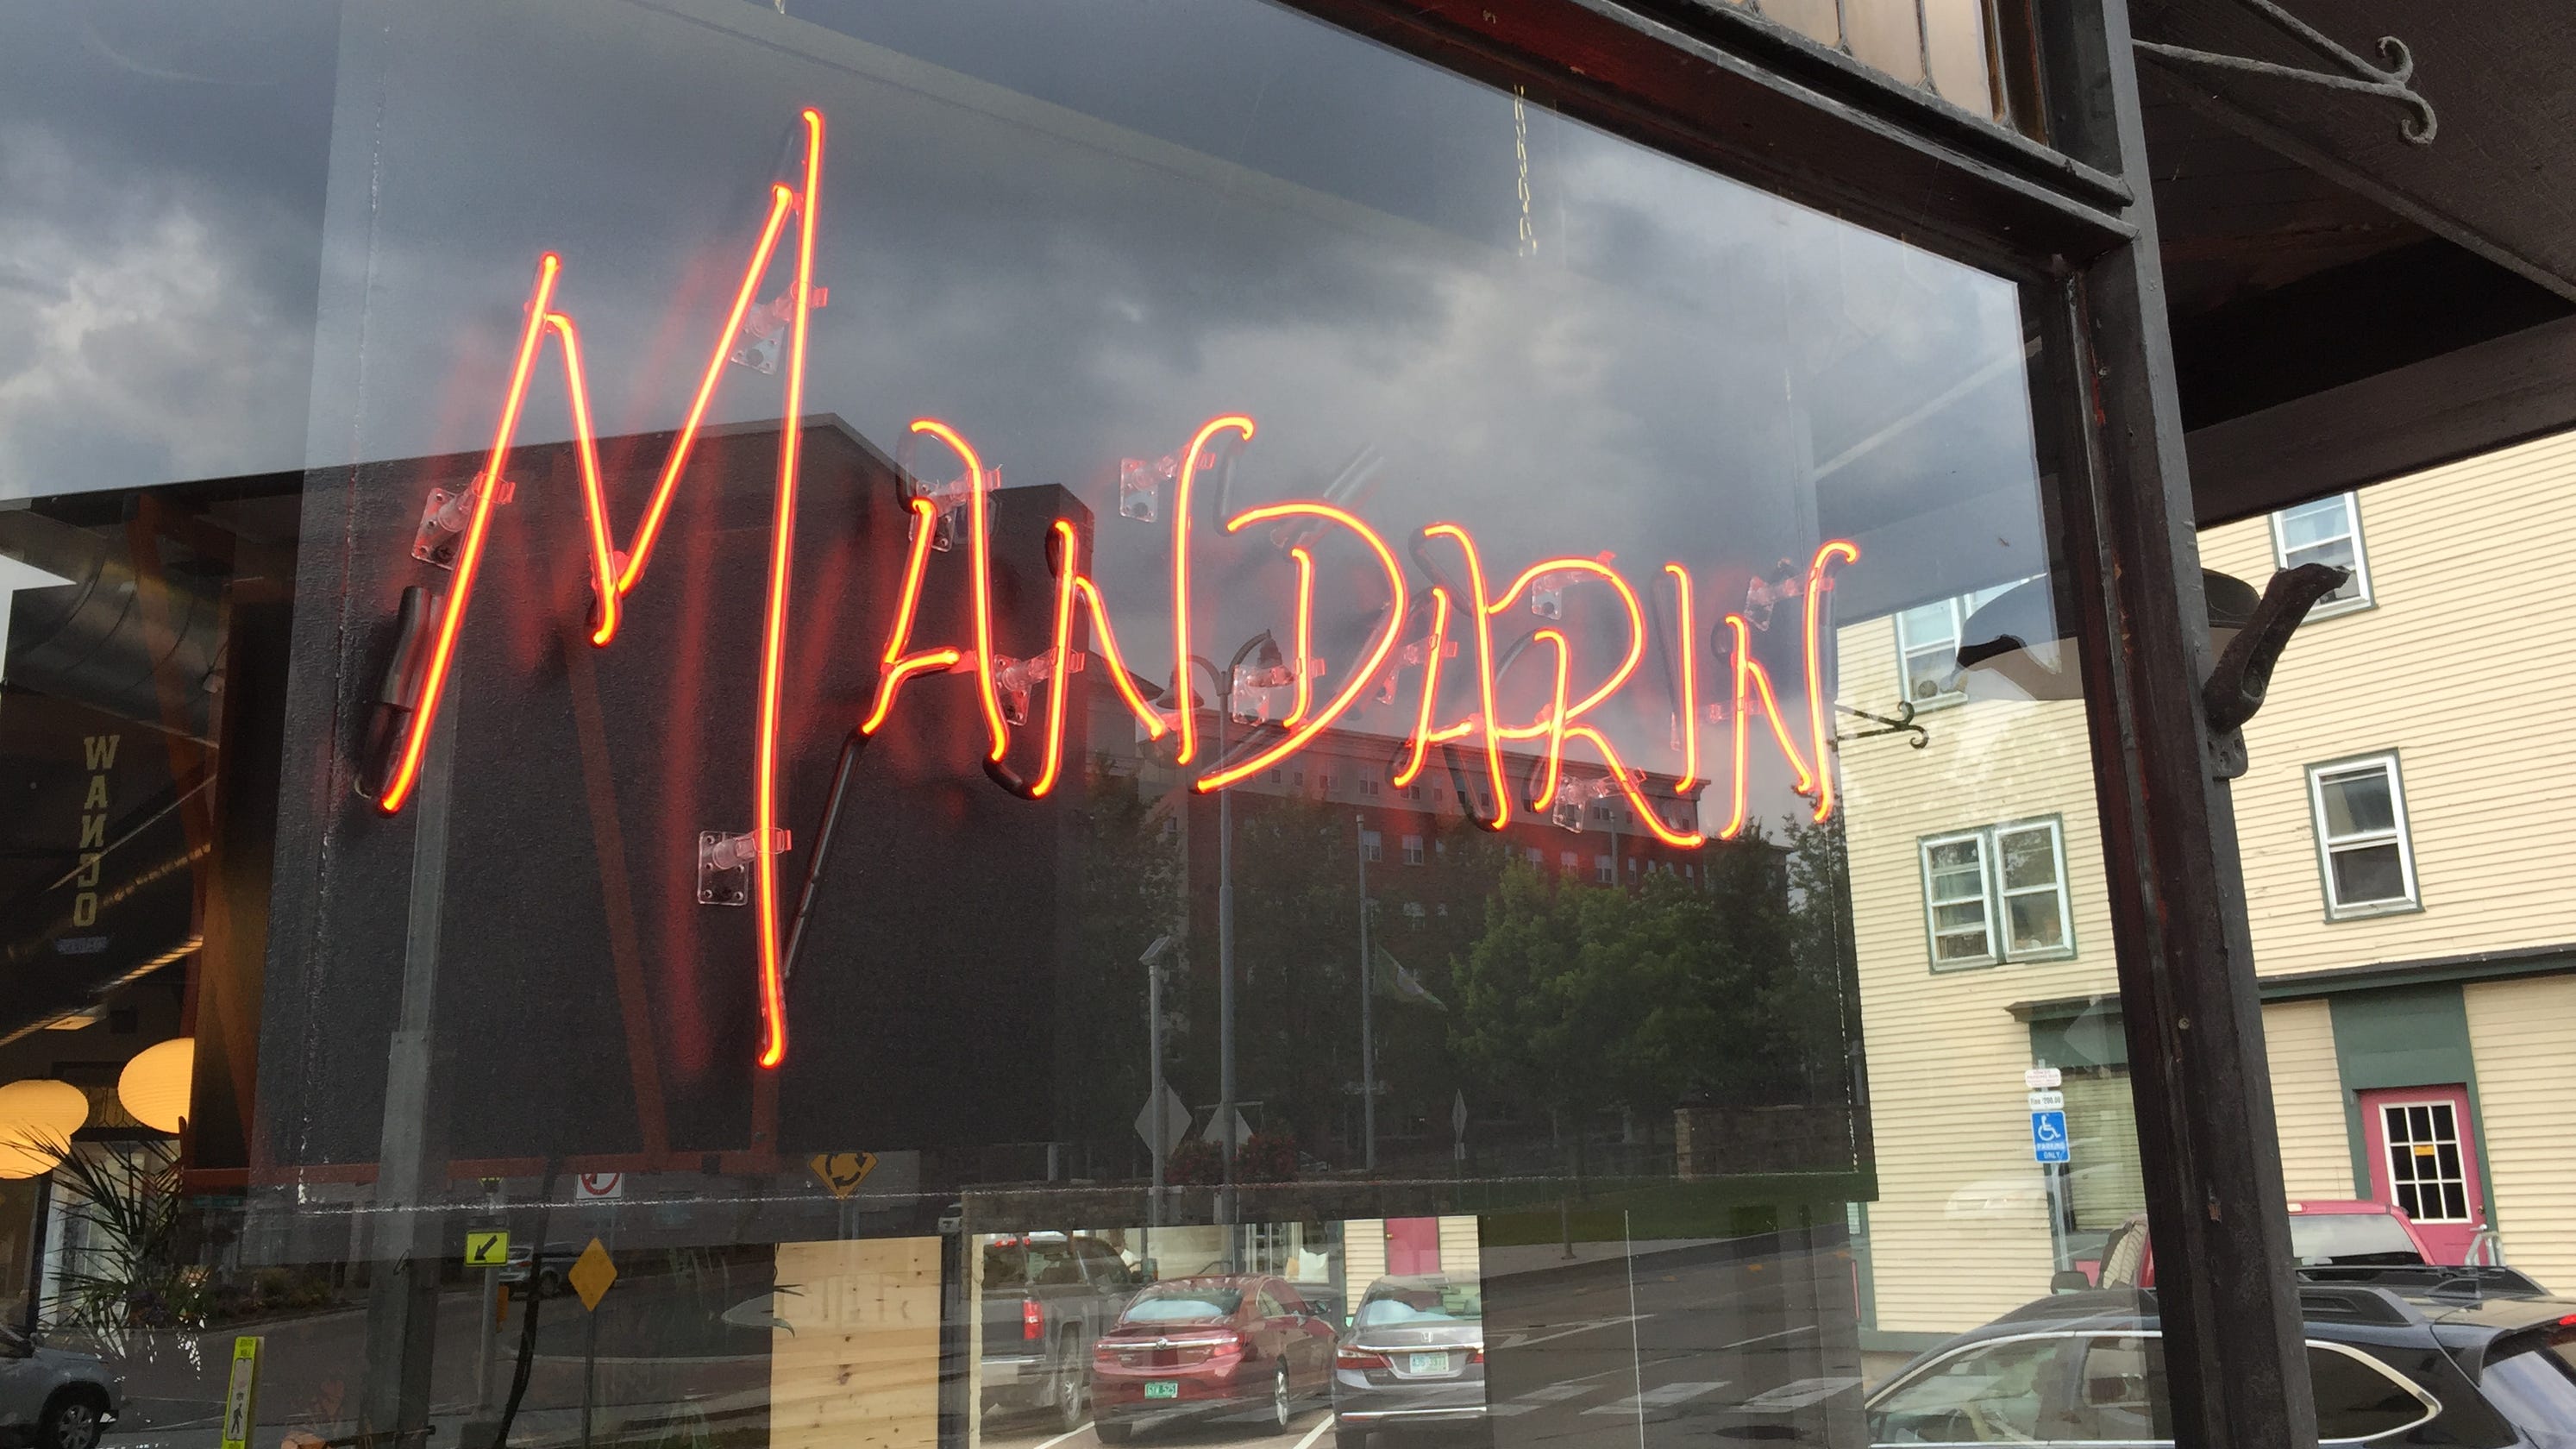 Chinese food near me: Mandarin restaurant opens on Winooski's Main St.